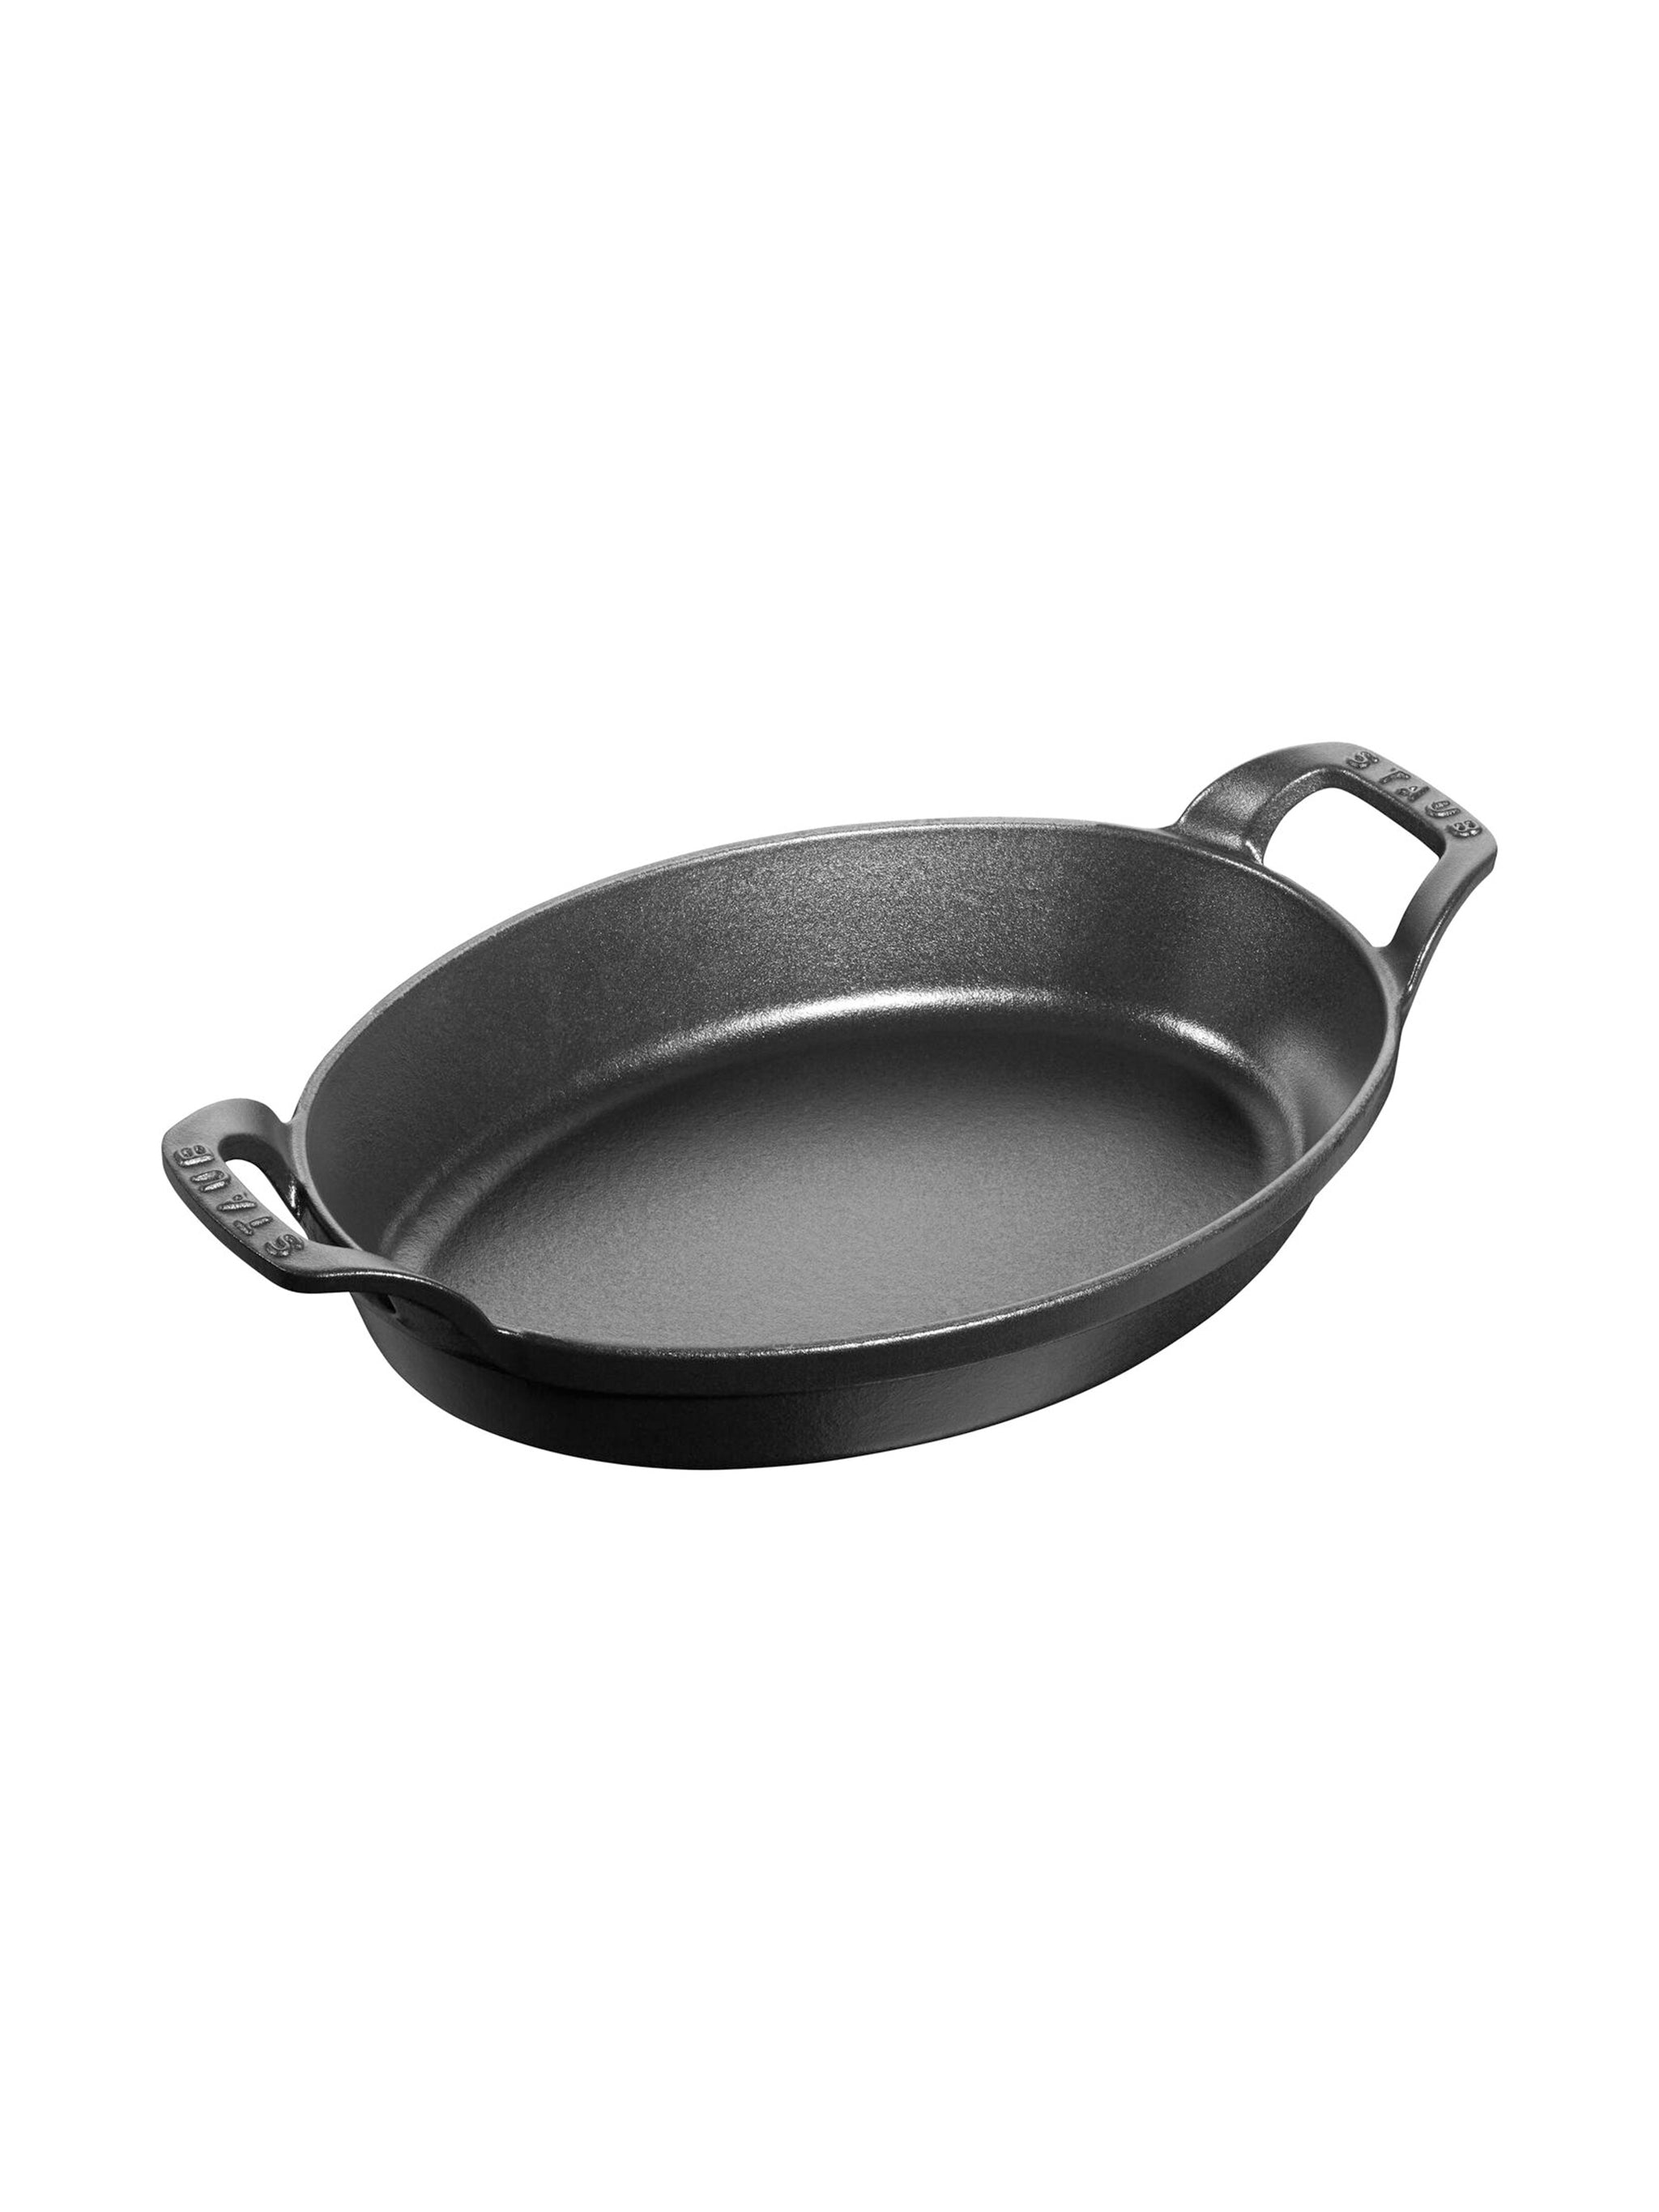 Staub Cast Iron 12.5x9 Oval Baking Dish, Black Matte